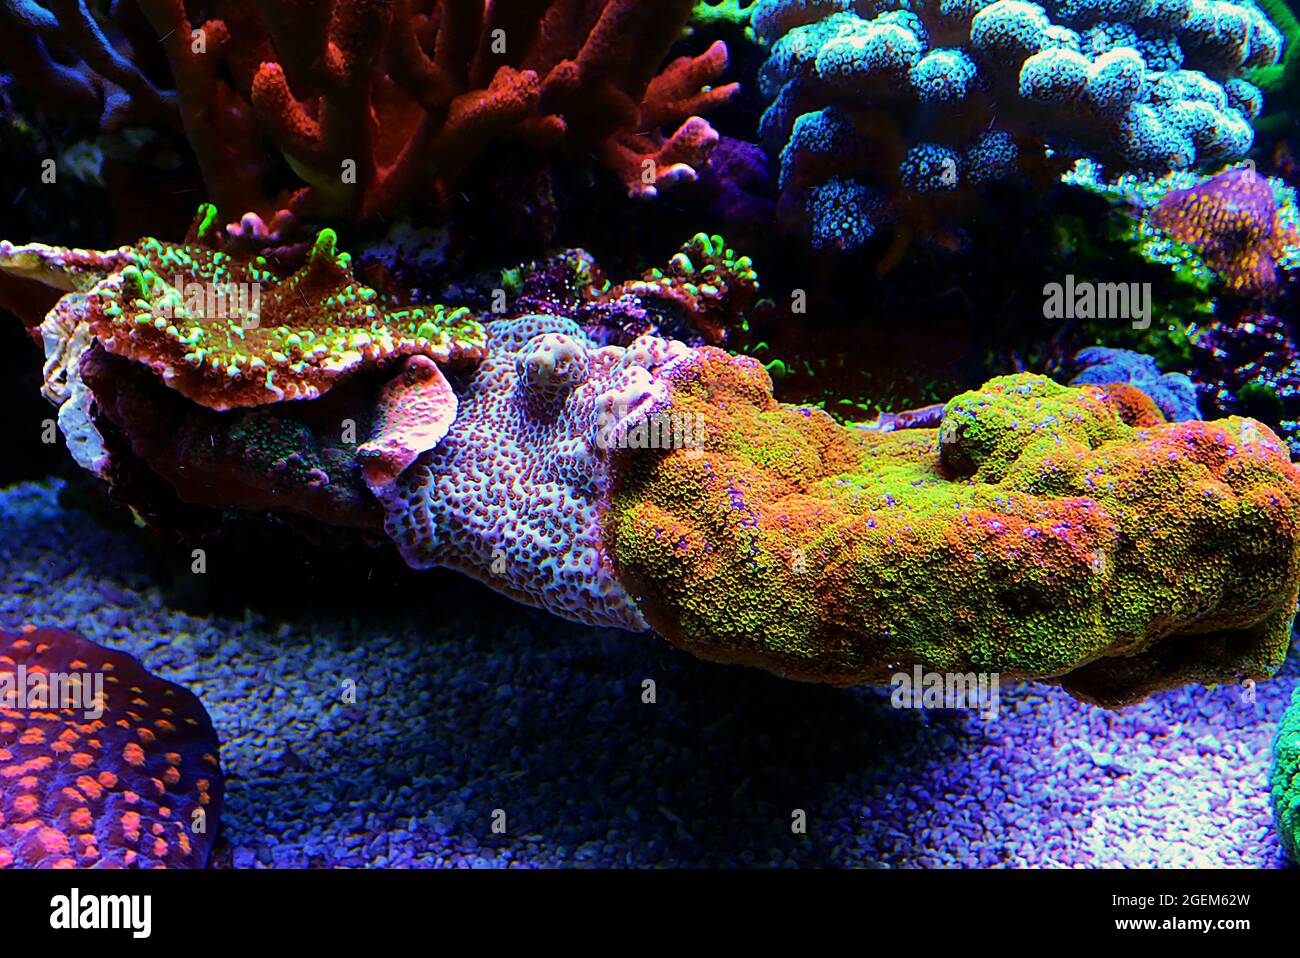 Montipora colorful stony coral in reef aquarium tank Stock Photo